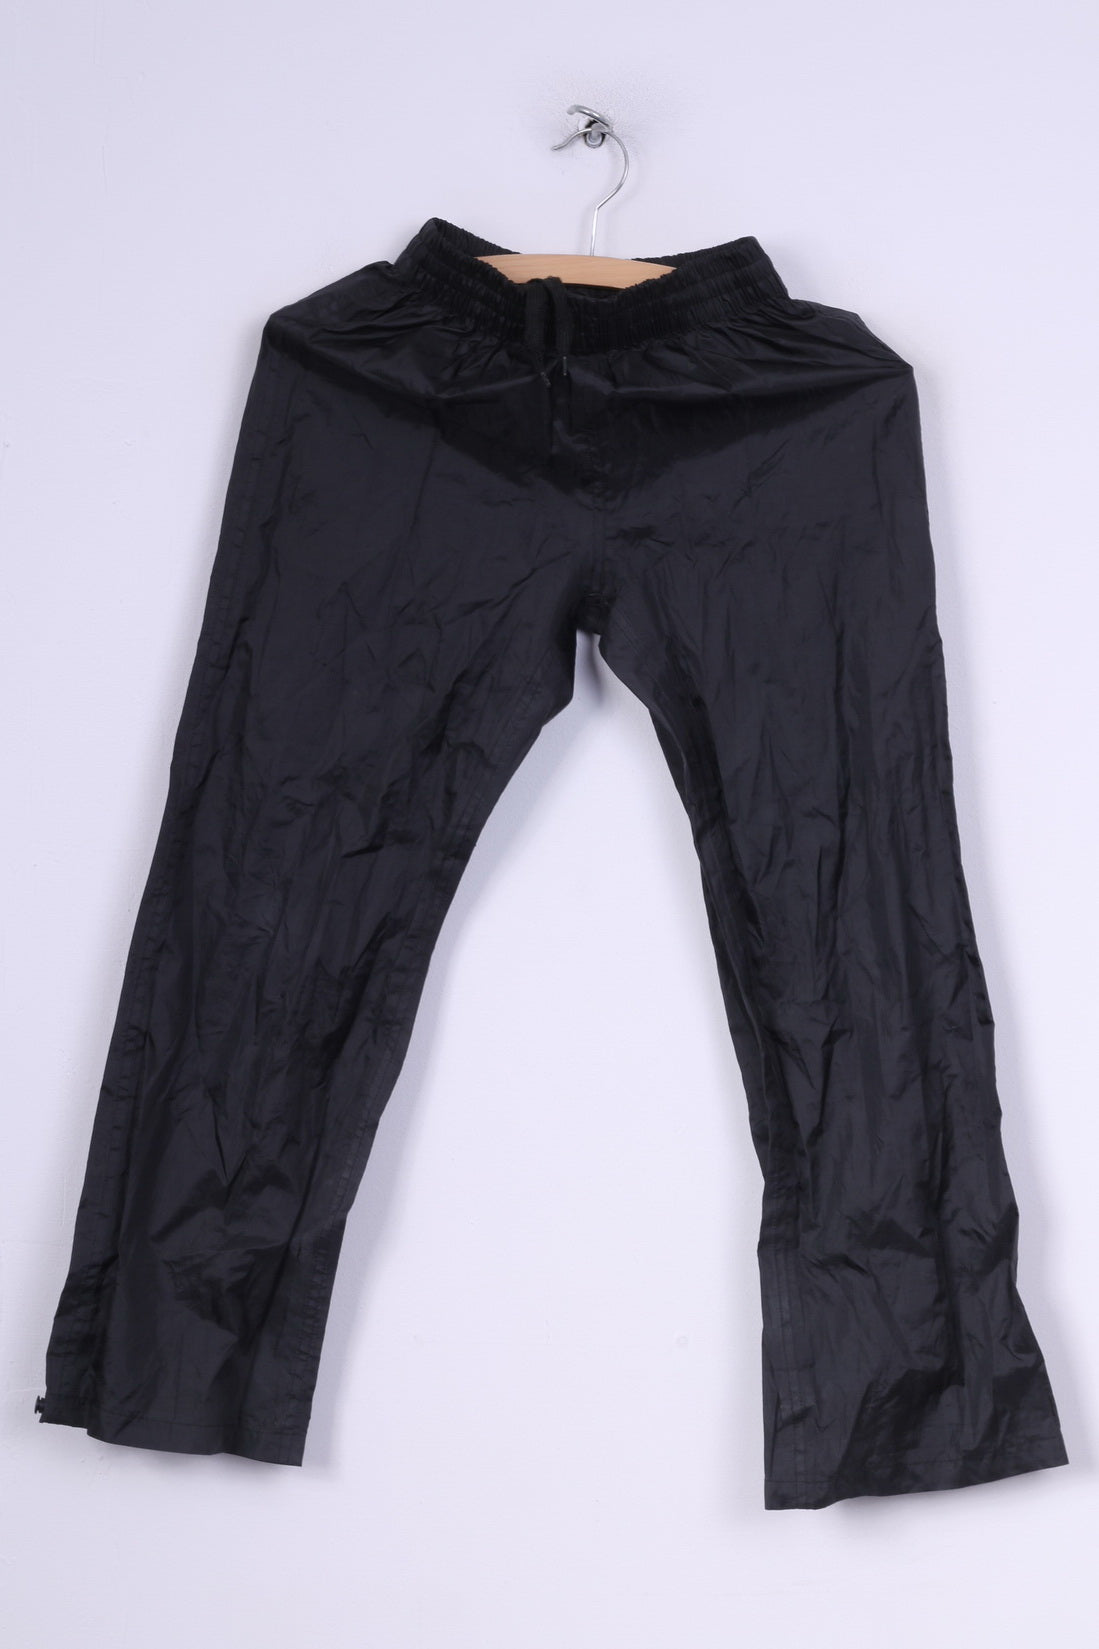 Pantalon garçon 8 ans noir Sportswear pantalon de pluie imperméable